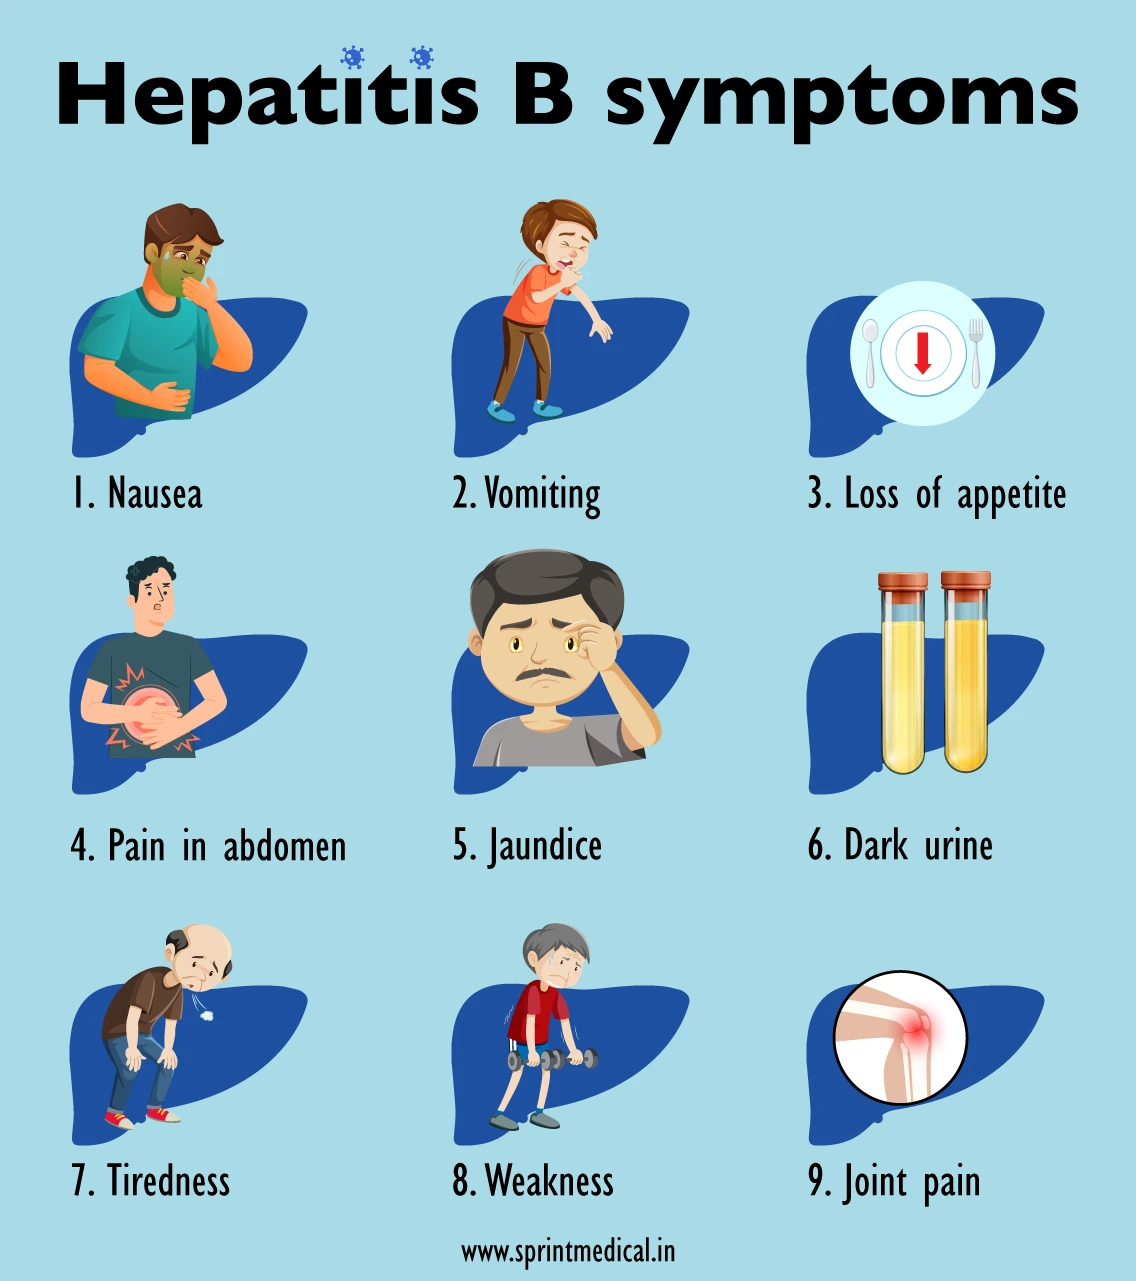 Hepatitis B - Symptoms, Treatment, Prevention, and More | Sprint ...